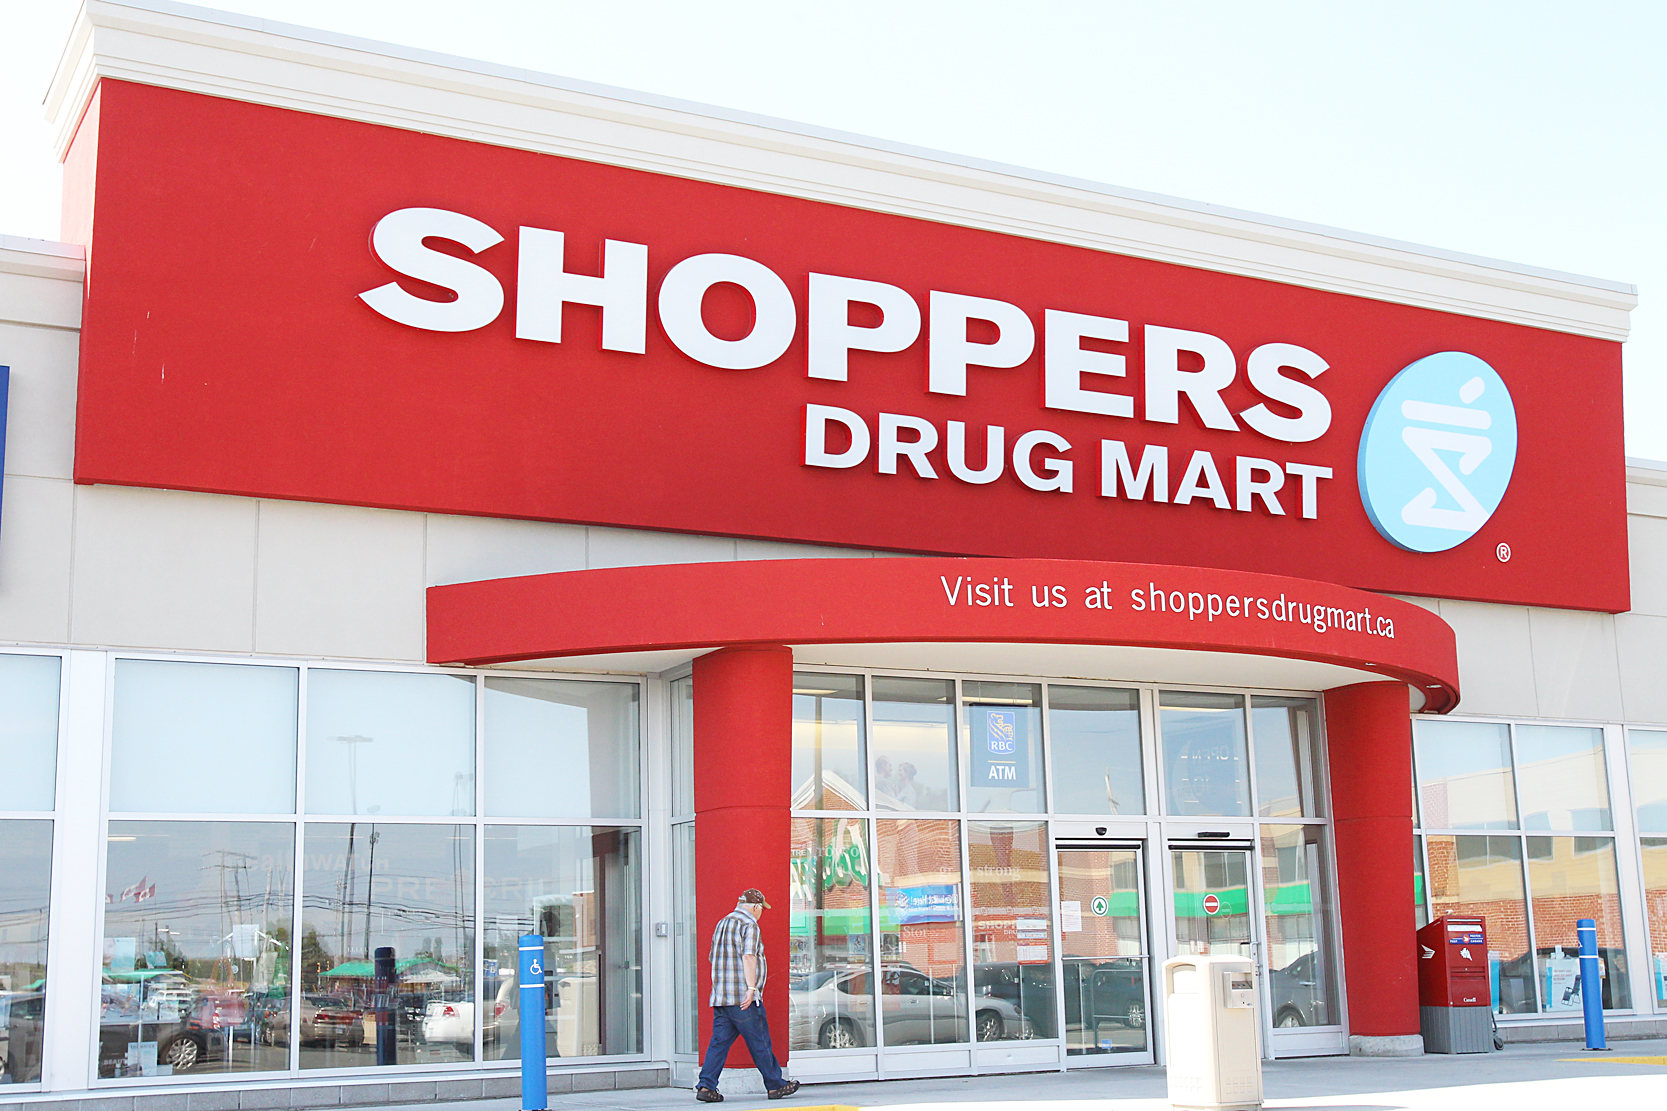 Shoppers Drug Mart Black Friday Canada 2014 Hot Sales, Deals and Door